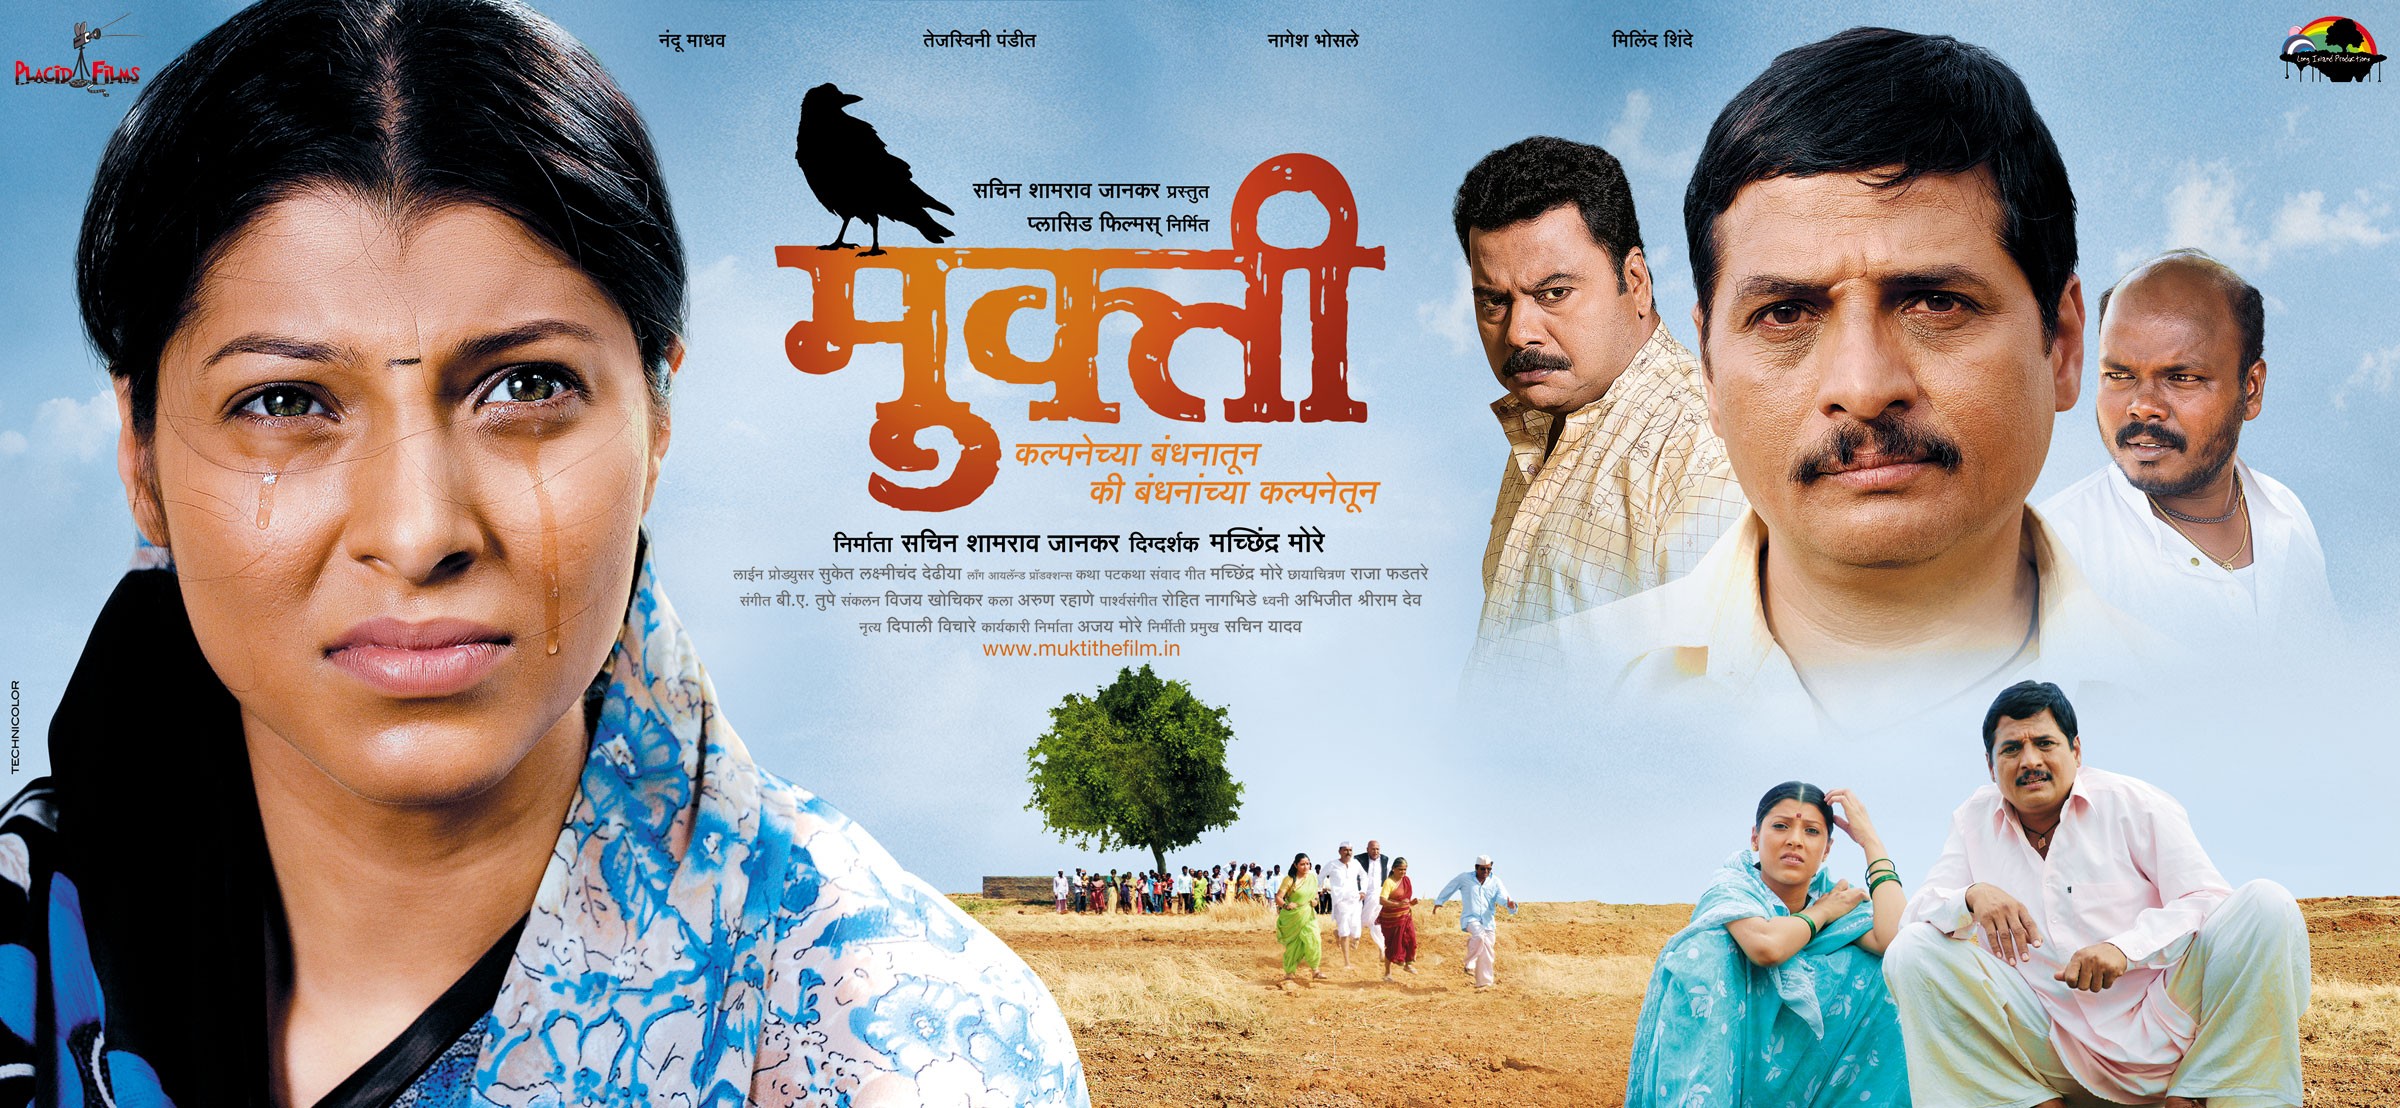 Mega Sized Movie Poster Image for Mukti (#5 of 7)